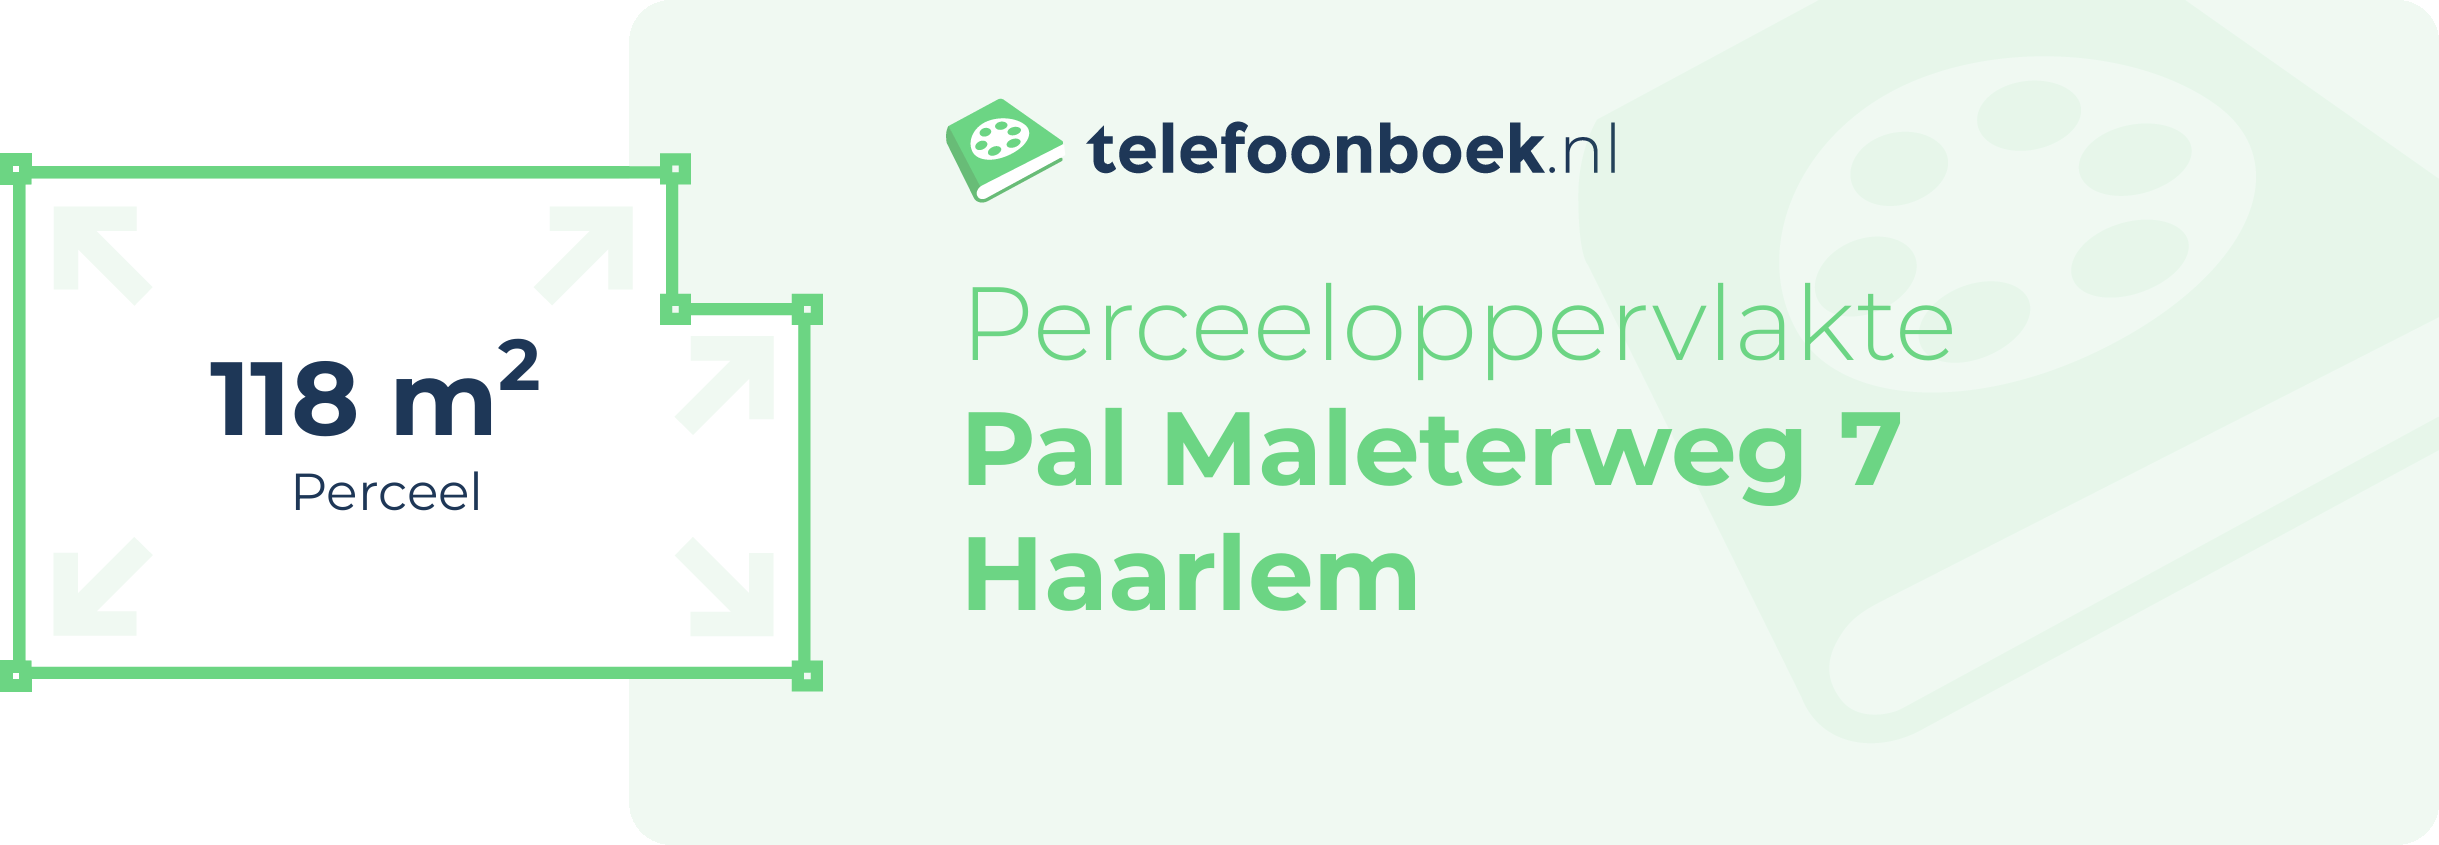 Perceeloppervlakte Pal Maleterweg 7 Haarlem